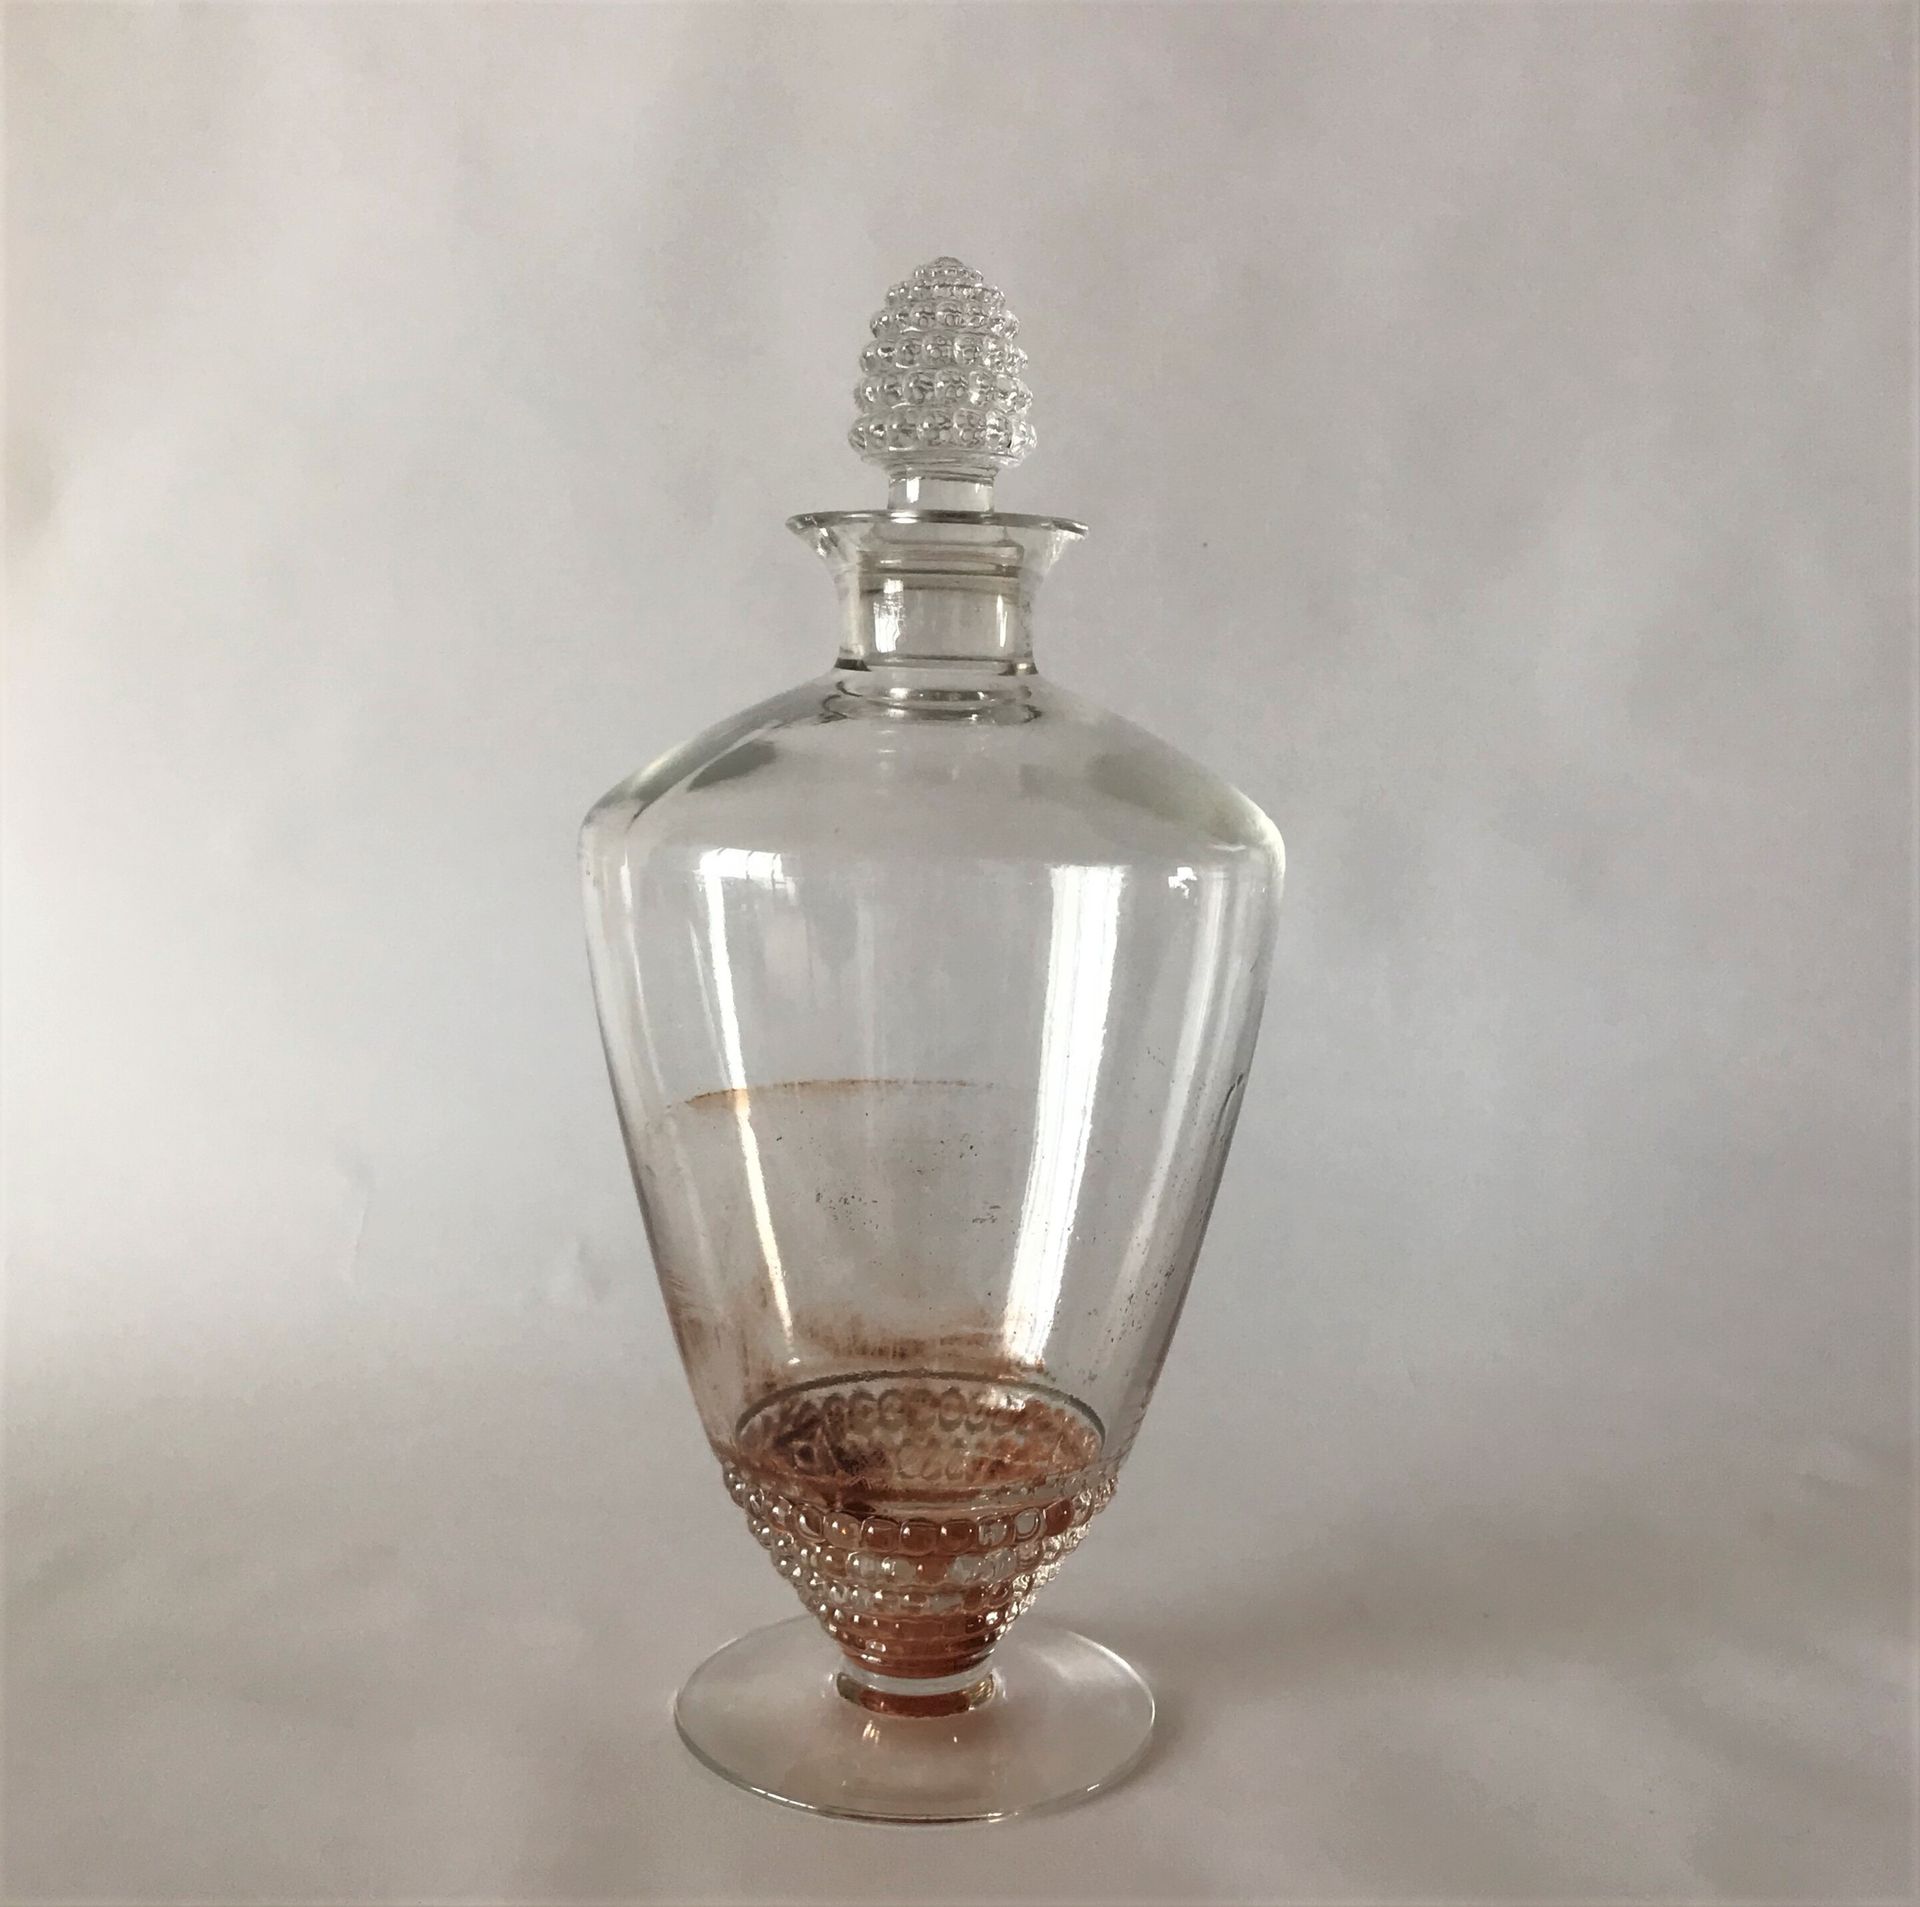 LALIQUE 生产商 LALIQUE

日本型号的水晶酒壶，底部有葡萄装饰。

签名：Lalique France

H.25厘米